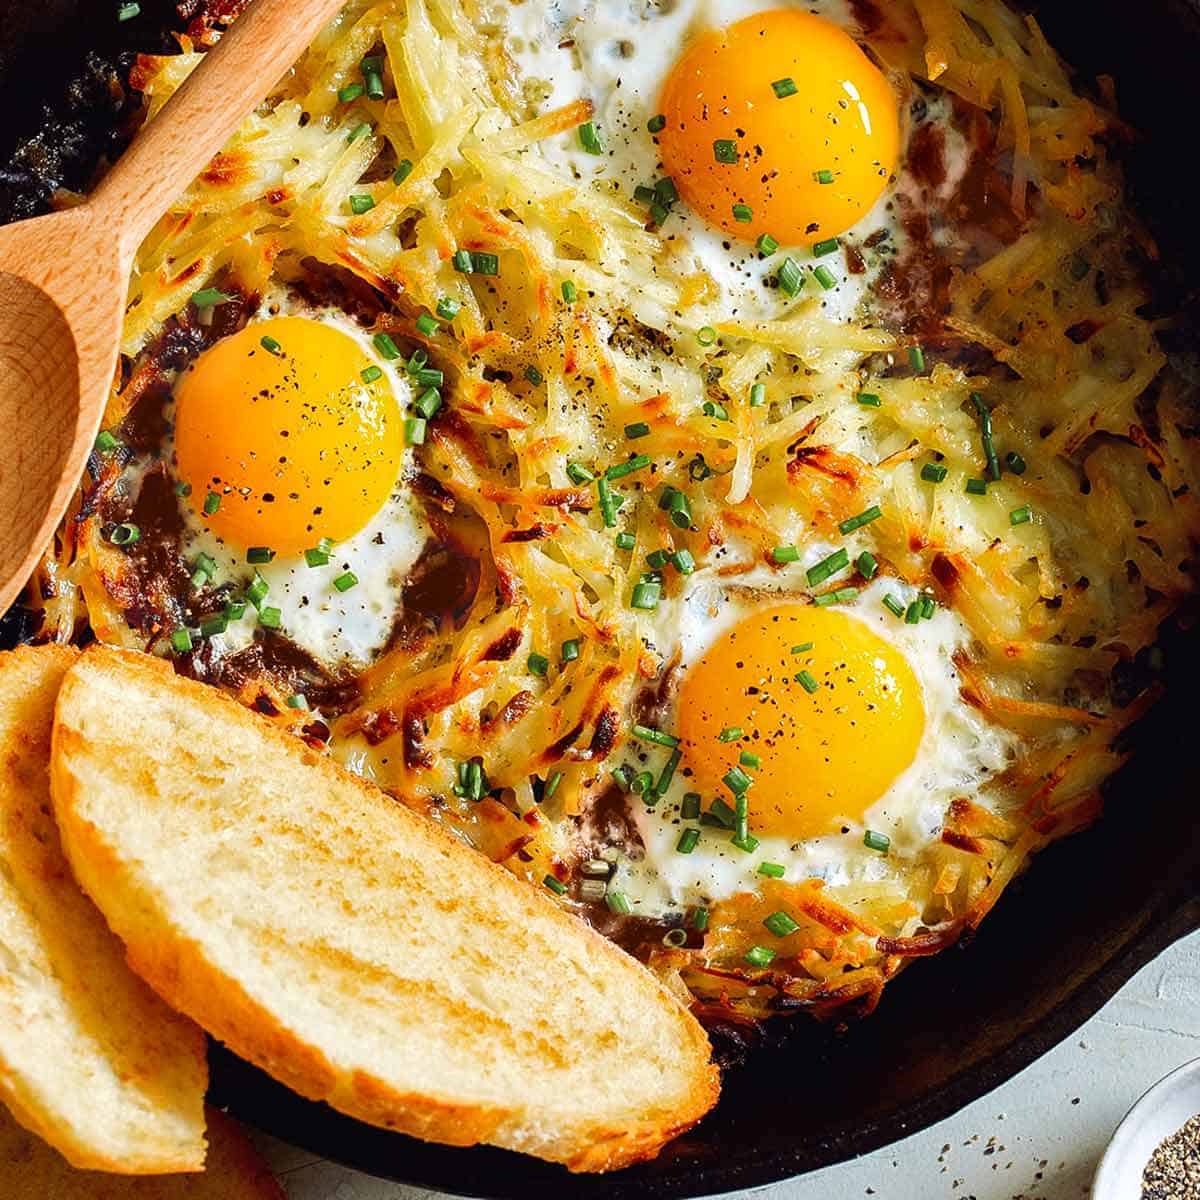 https://www.spoonforkbacon.com/wp-content/uploads/2017/08/cheesy-skillet-hashbrown-eggs-recipe.jpg